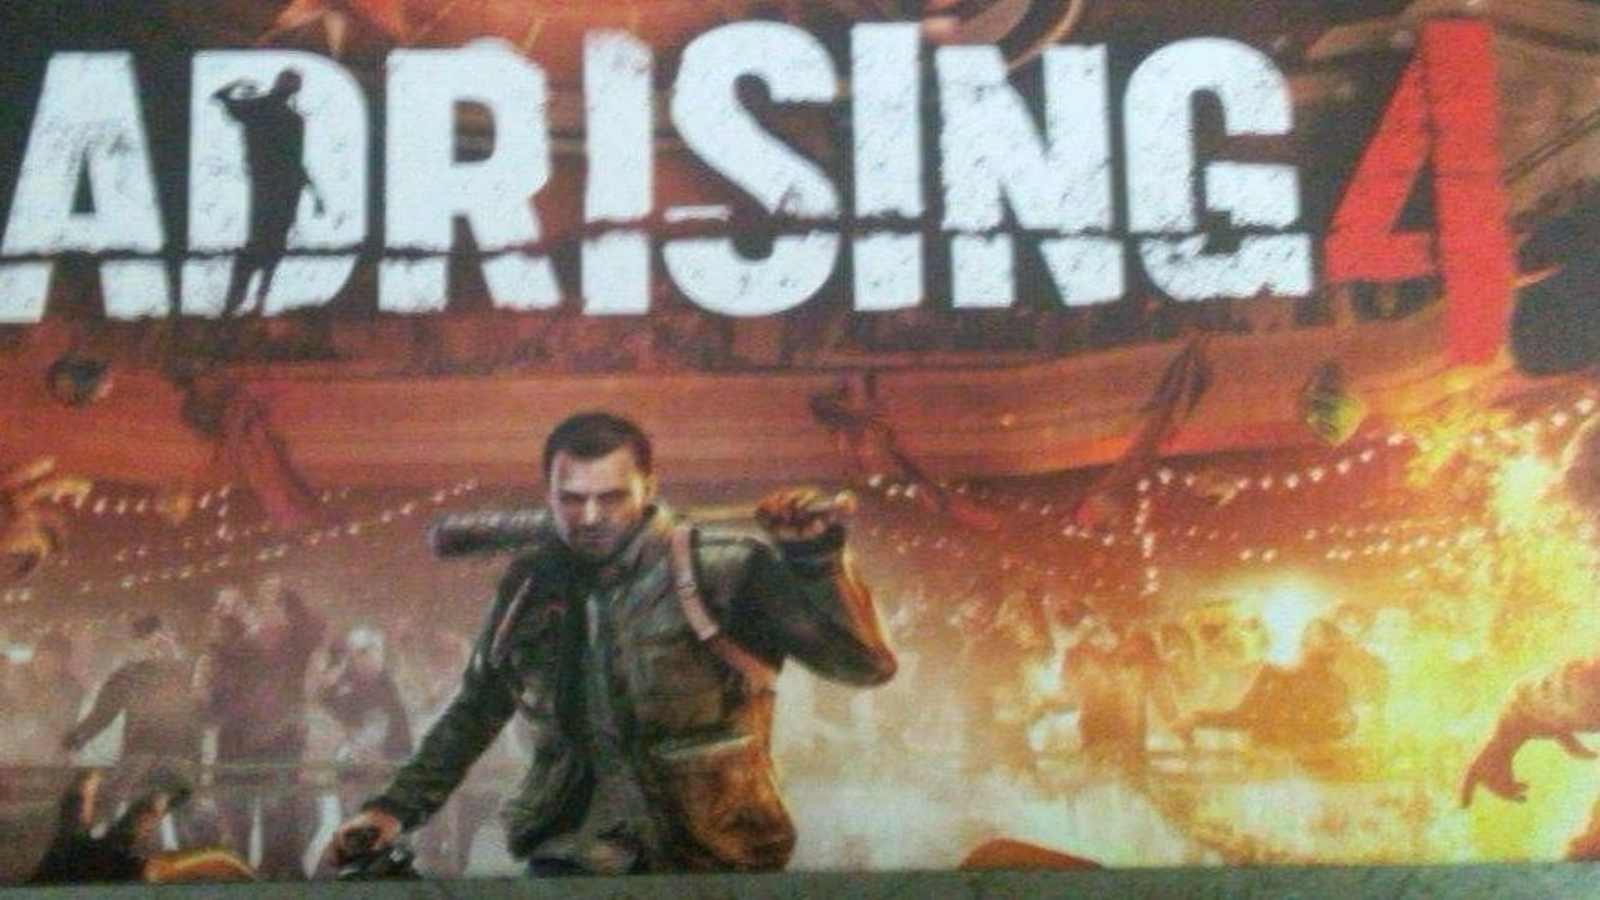 Dead Rising 4's True Ending Is Locked Behind Paid DLC, Regular Ending Is  a Cliffhanger - GameRevolution